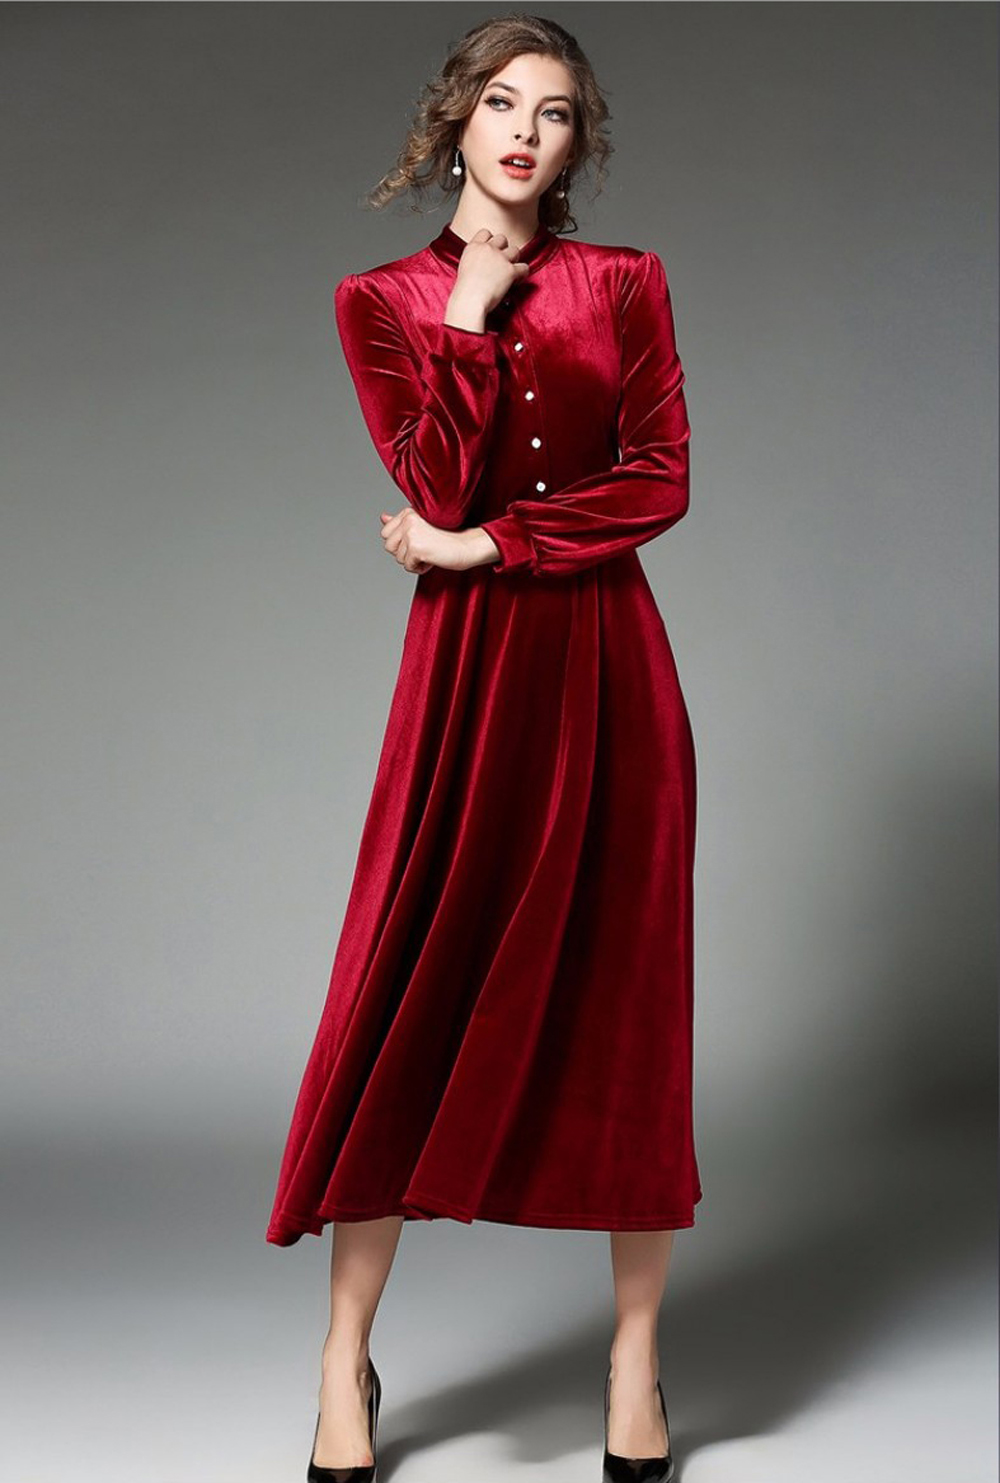 Buy Vivient Women Maroon Buttoned Velvet Dress at shopclues.com